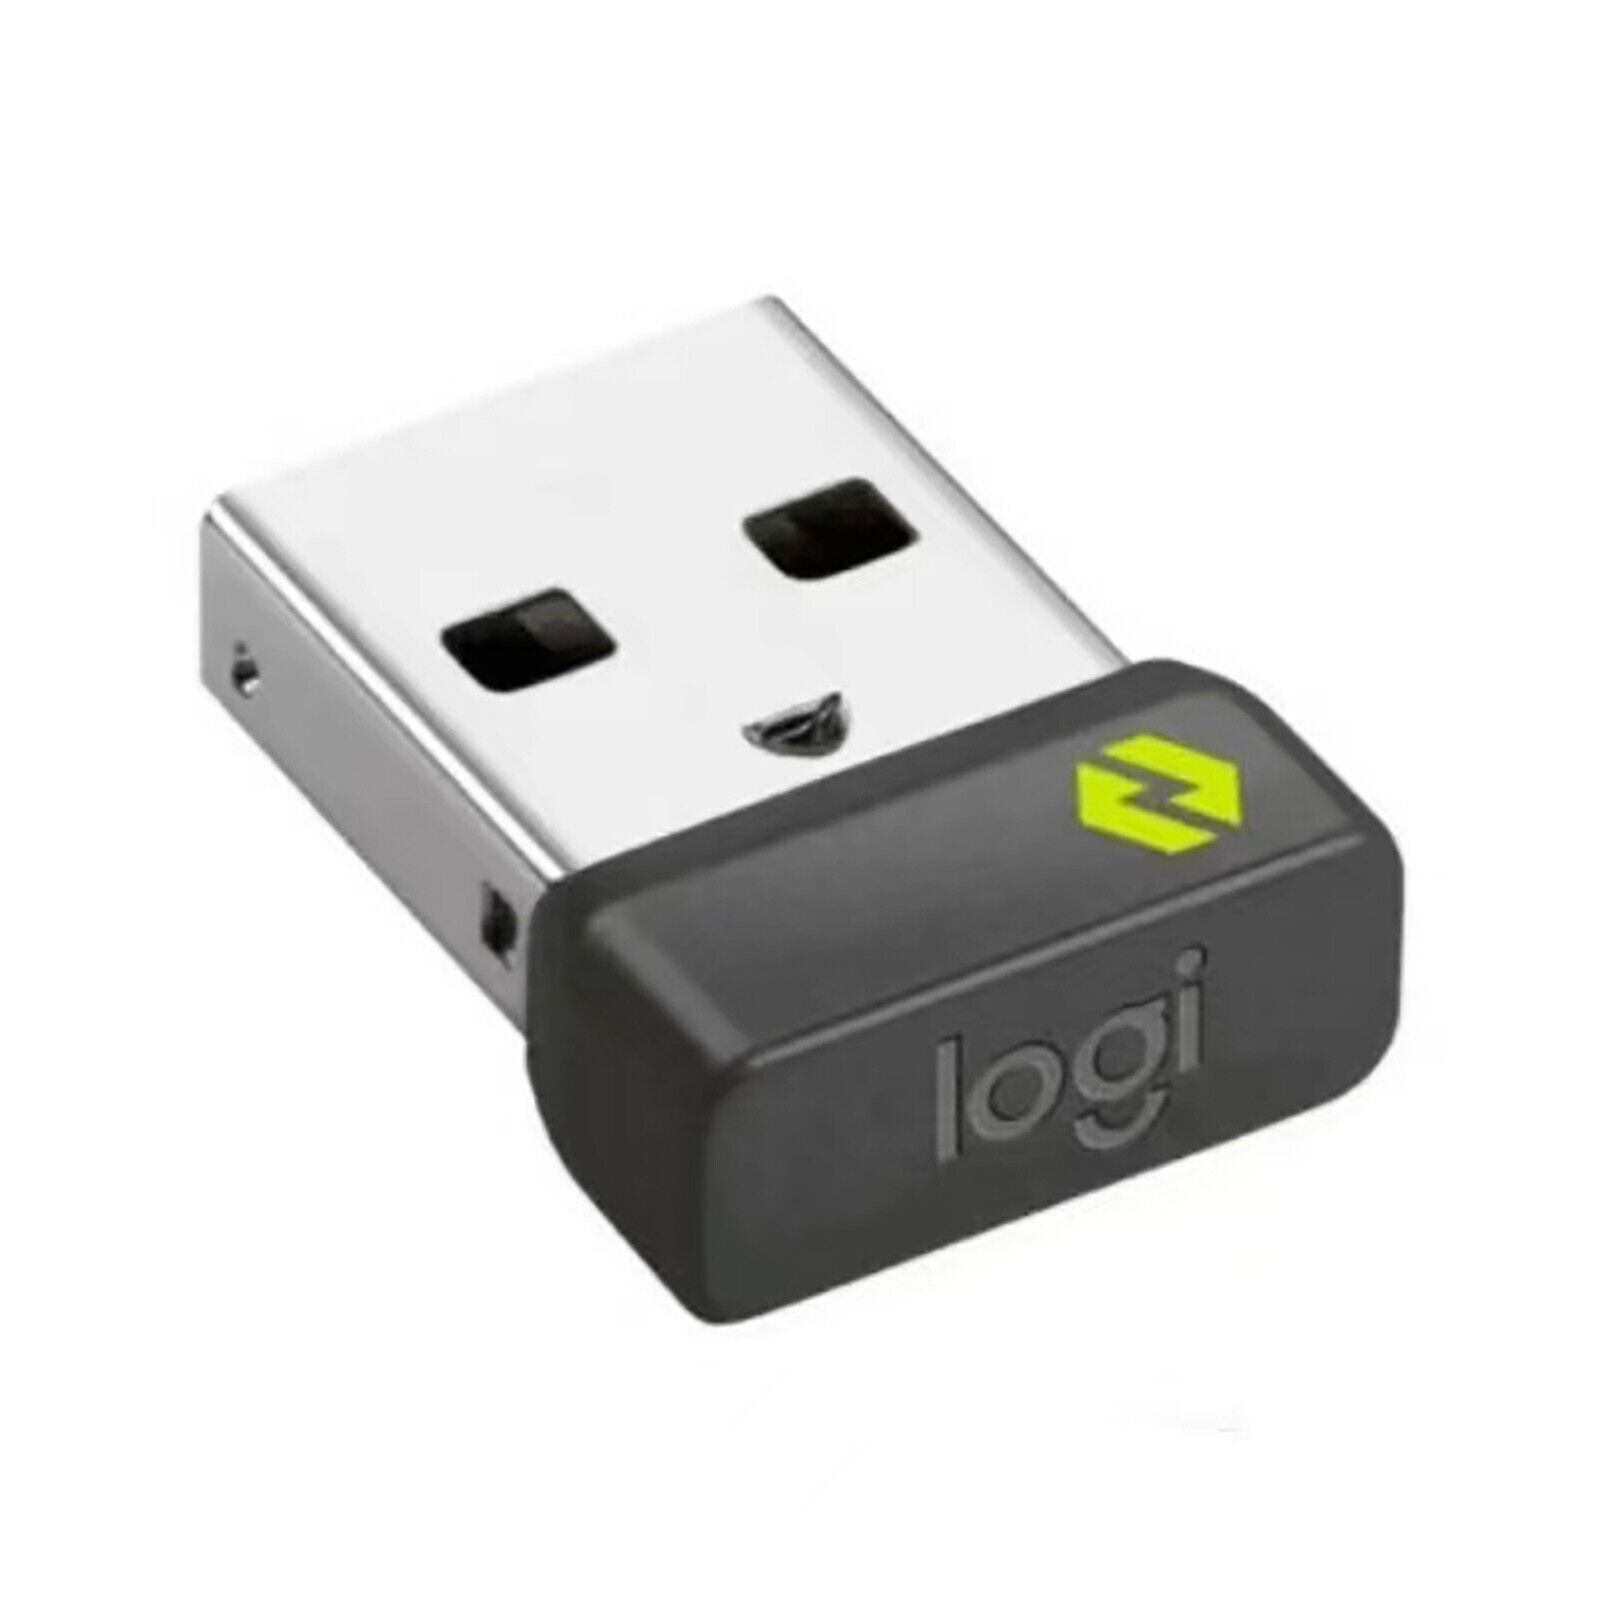 Logi Bolt USB Wireless Receiver Accessories for Logitech Keyboard Mouse